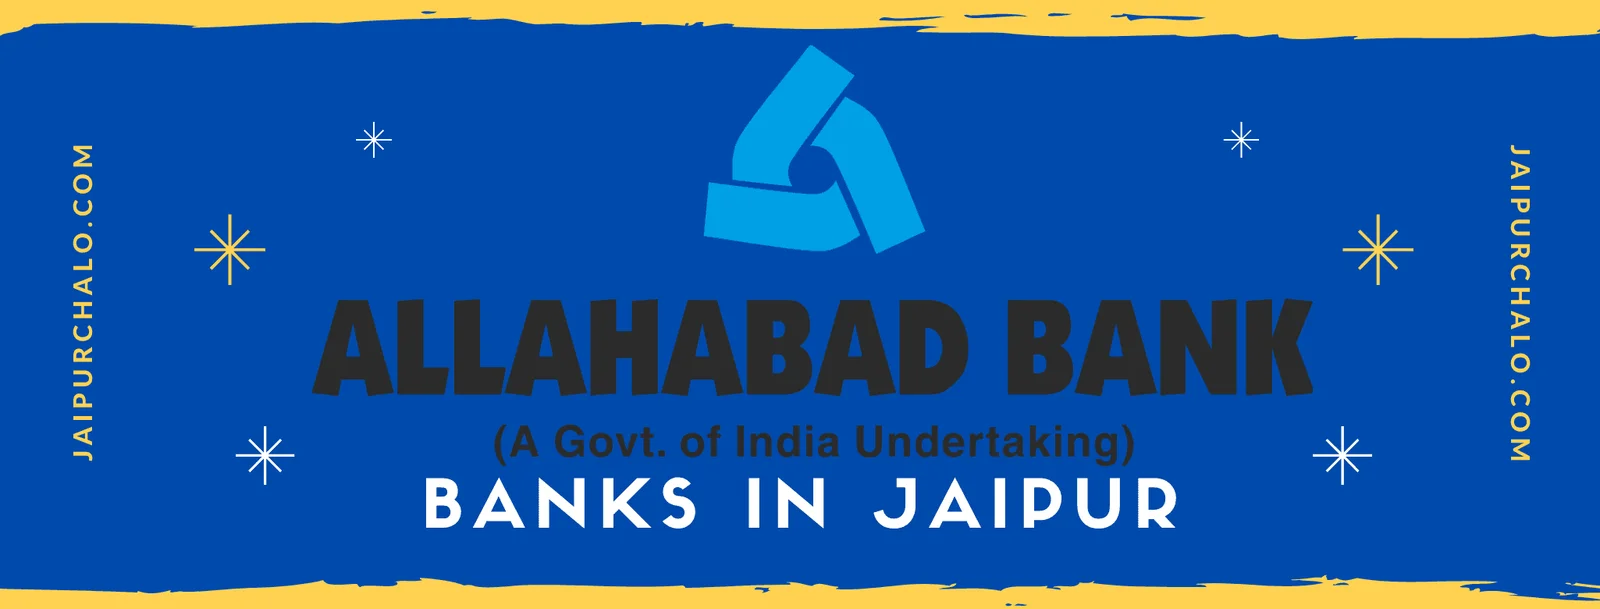 Allahabad bank in jaipur